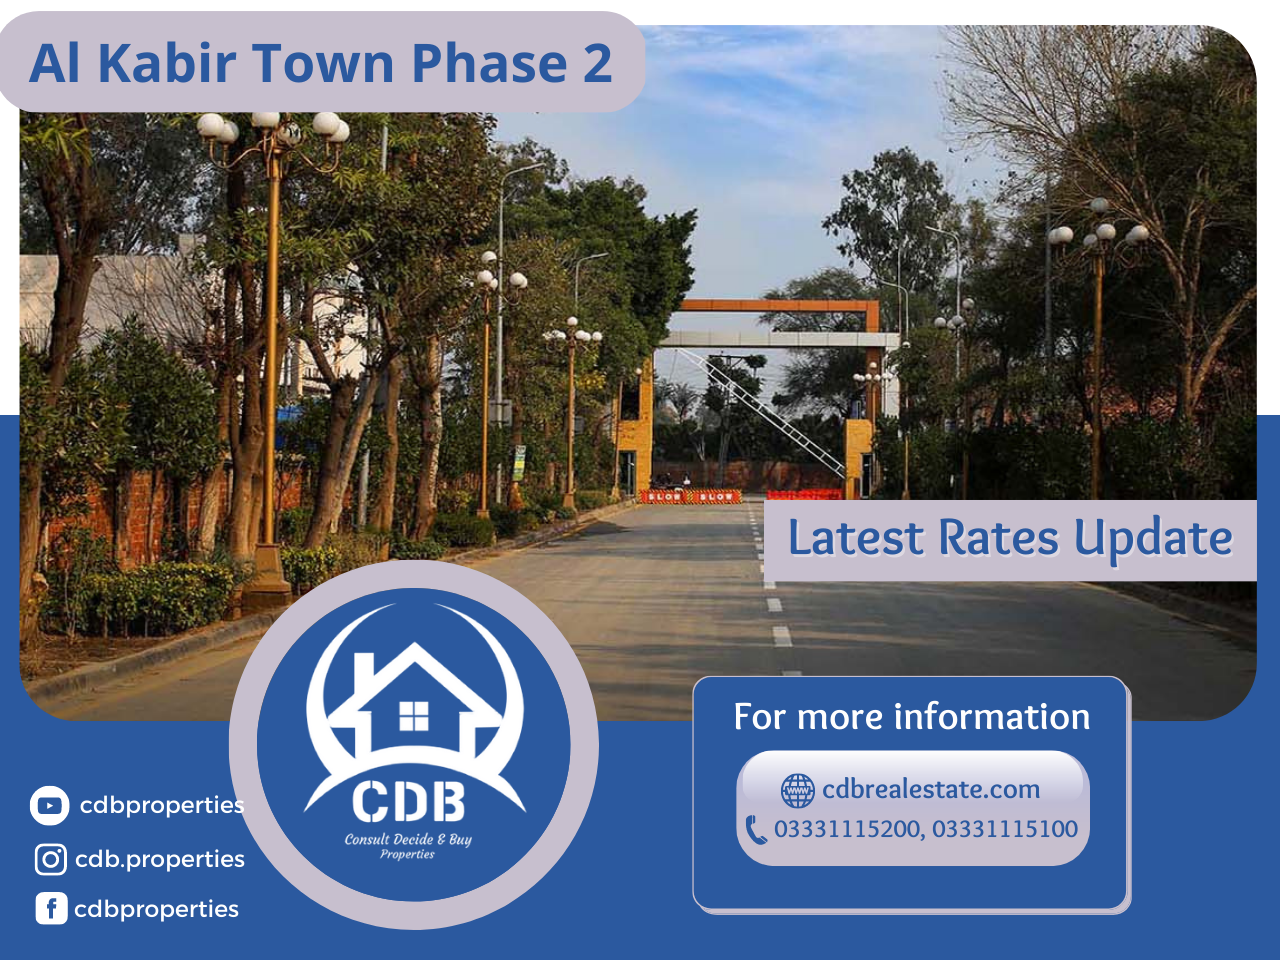 al kabir town phase 2 entrance